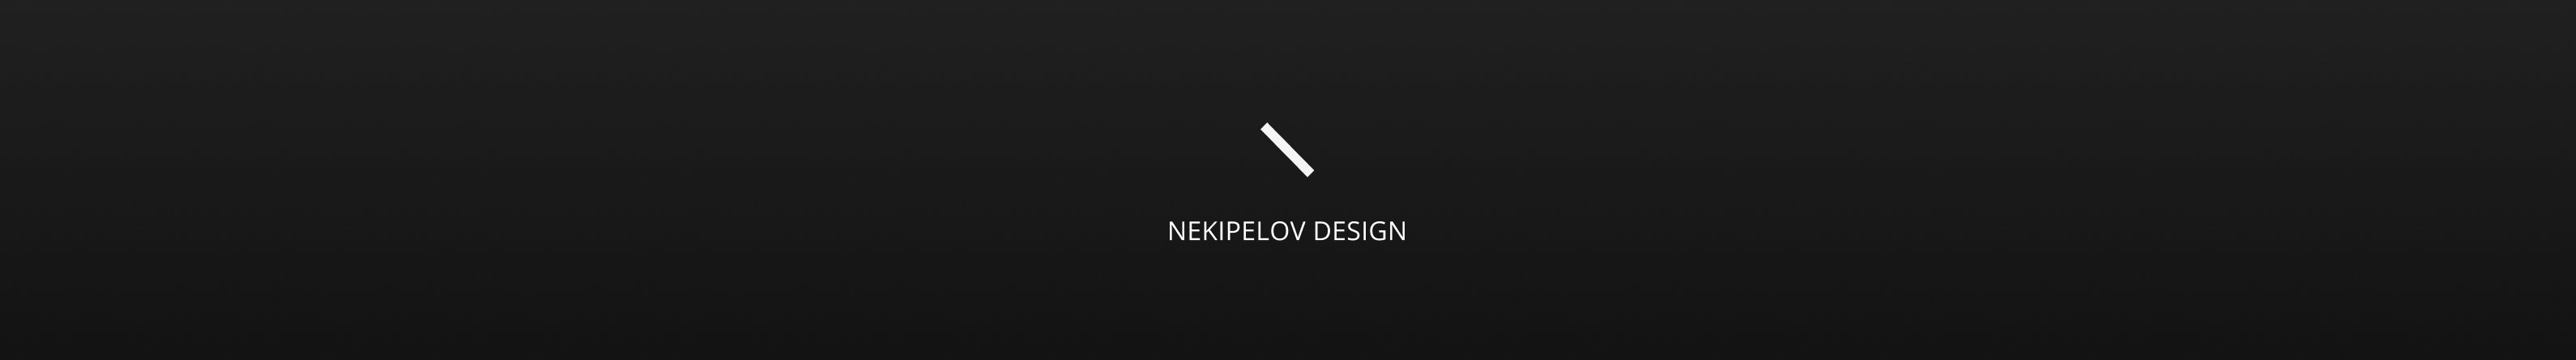 Nikita Nekipelov's profile banner